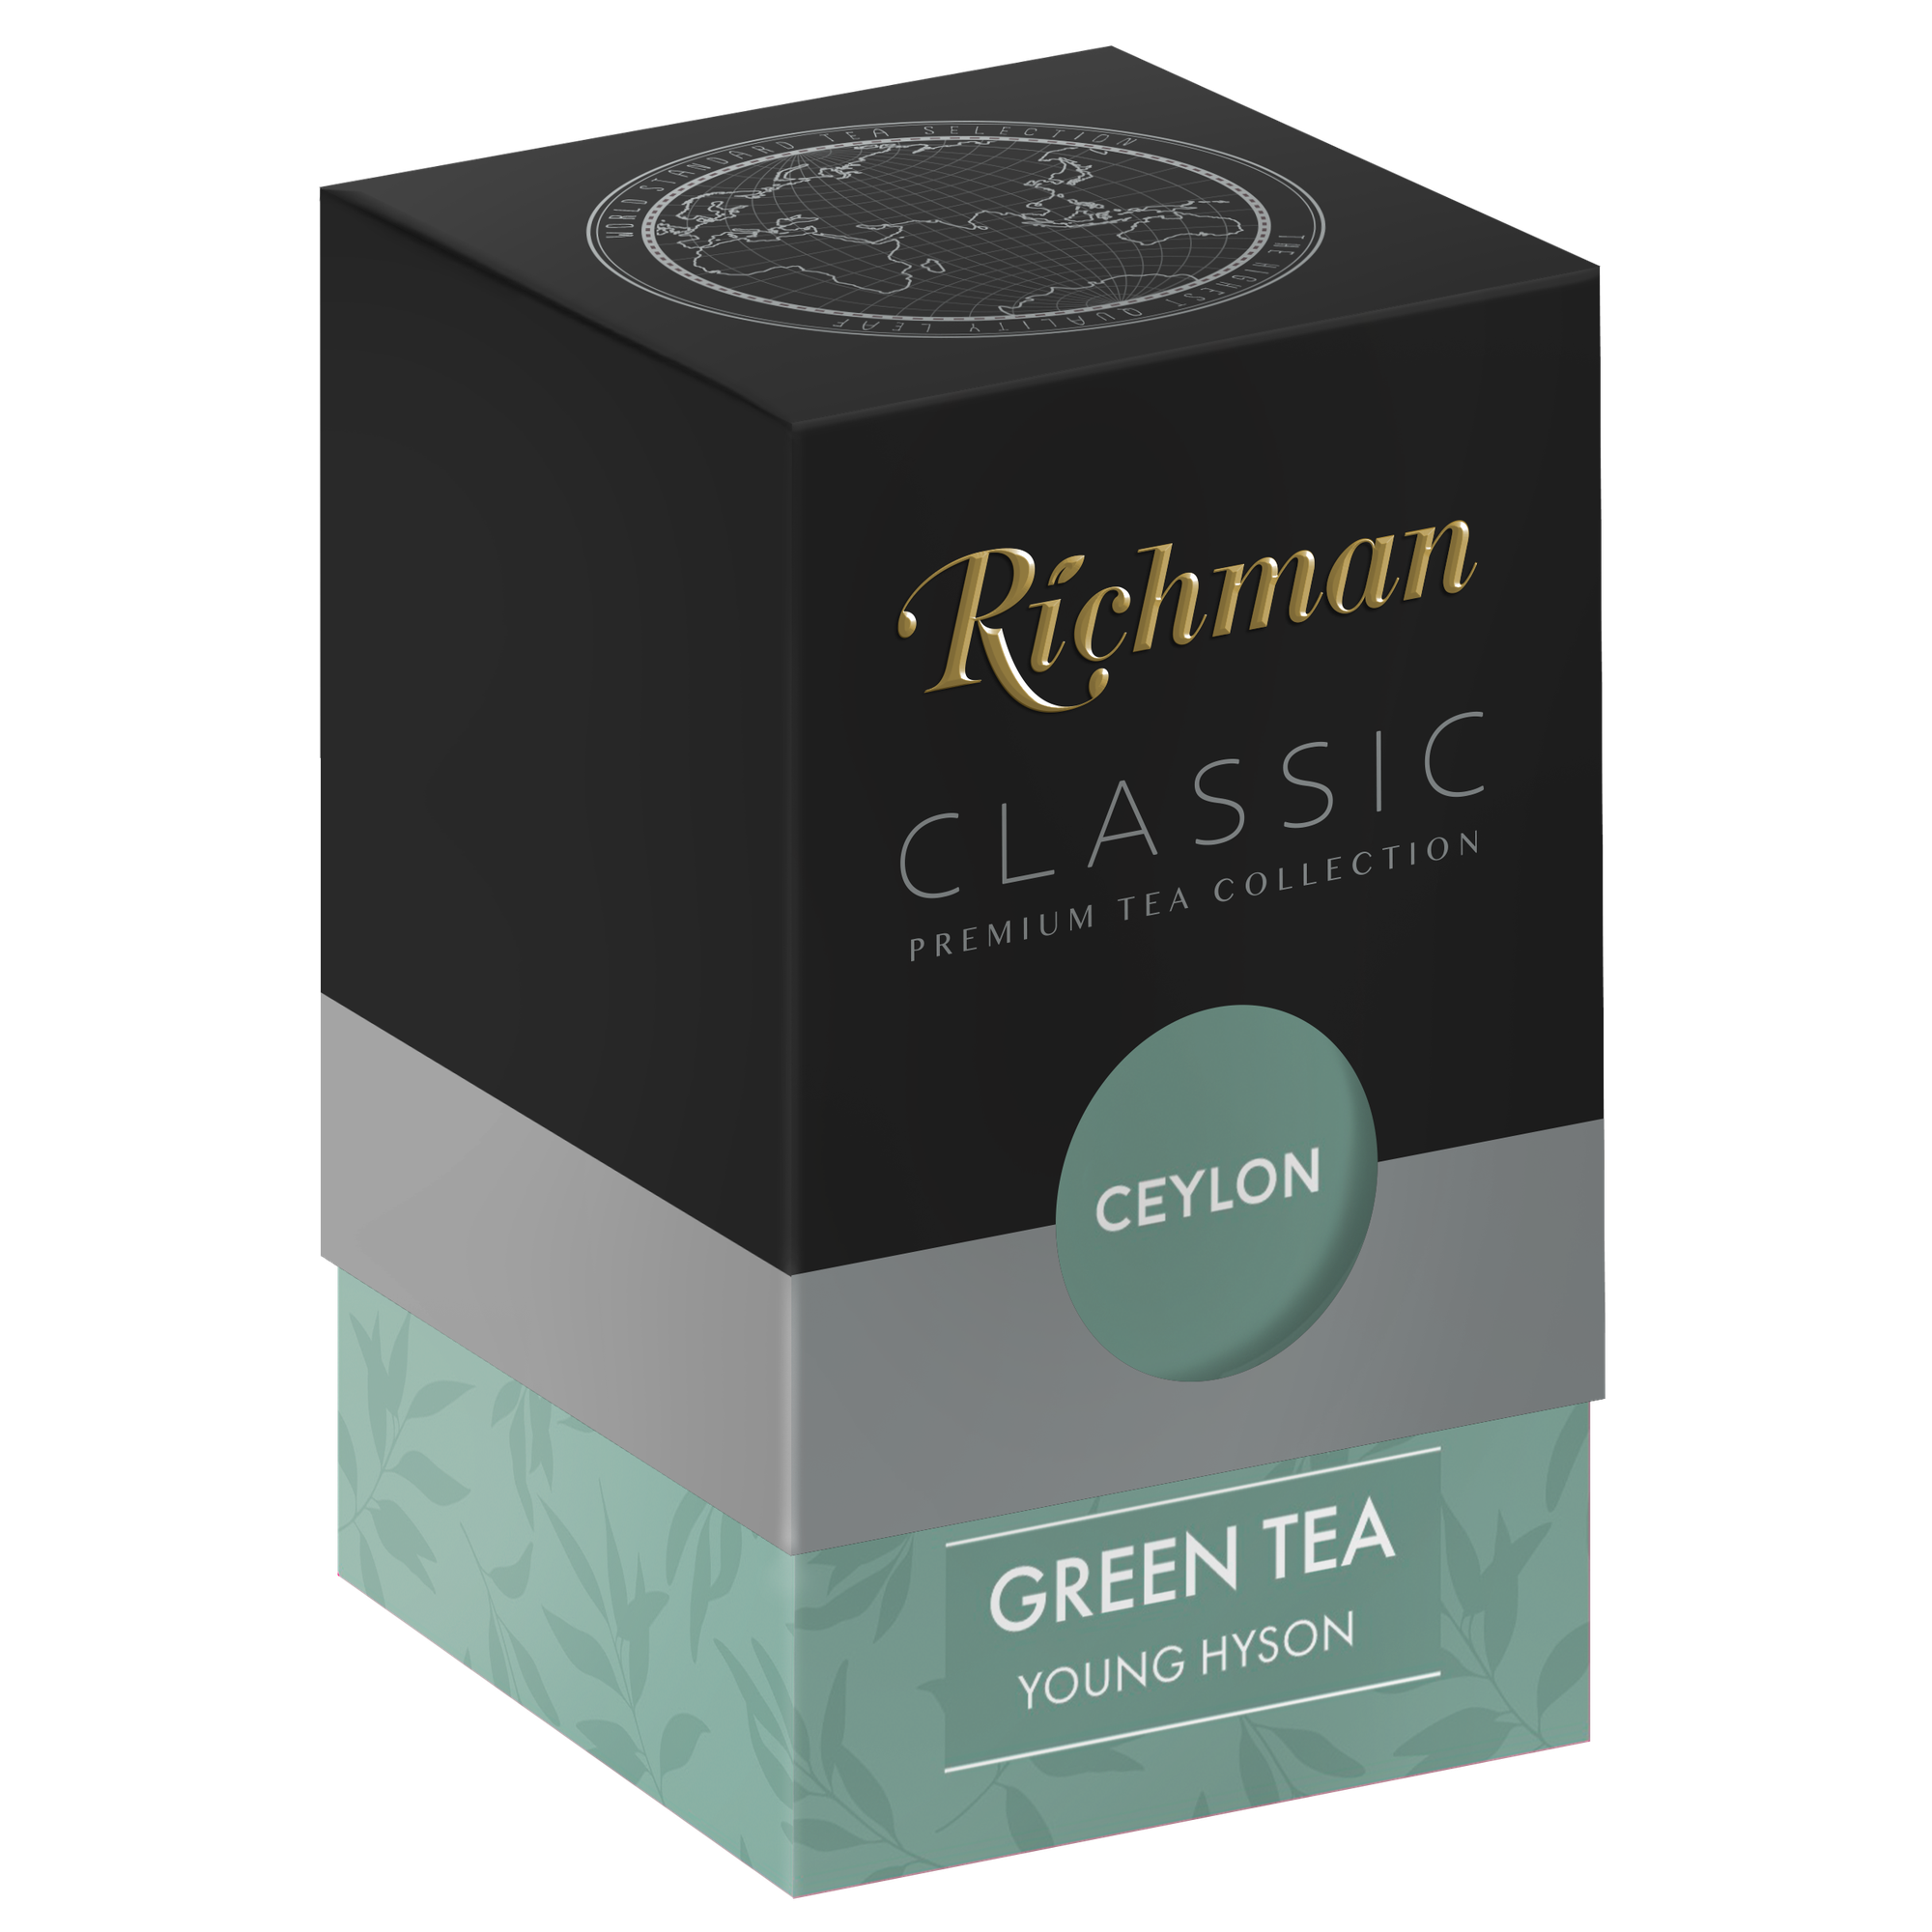 Чай Richman Classic зеленый крупнолистовой, стандарт "Young Hyson" YH 100г цейлон, картонная коробка